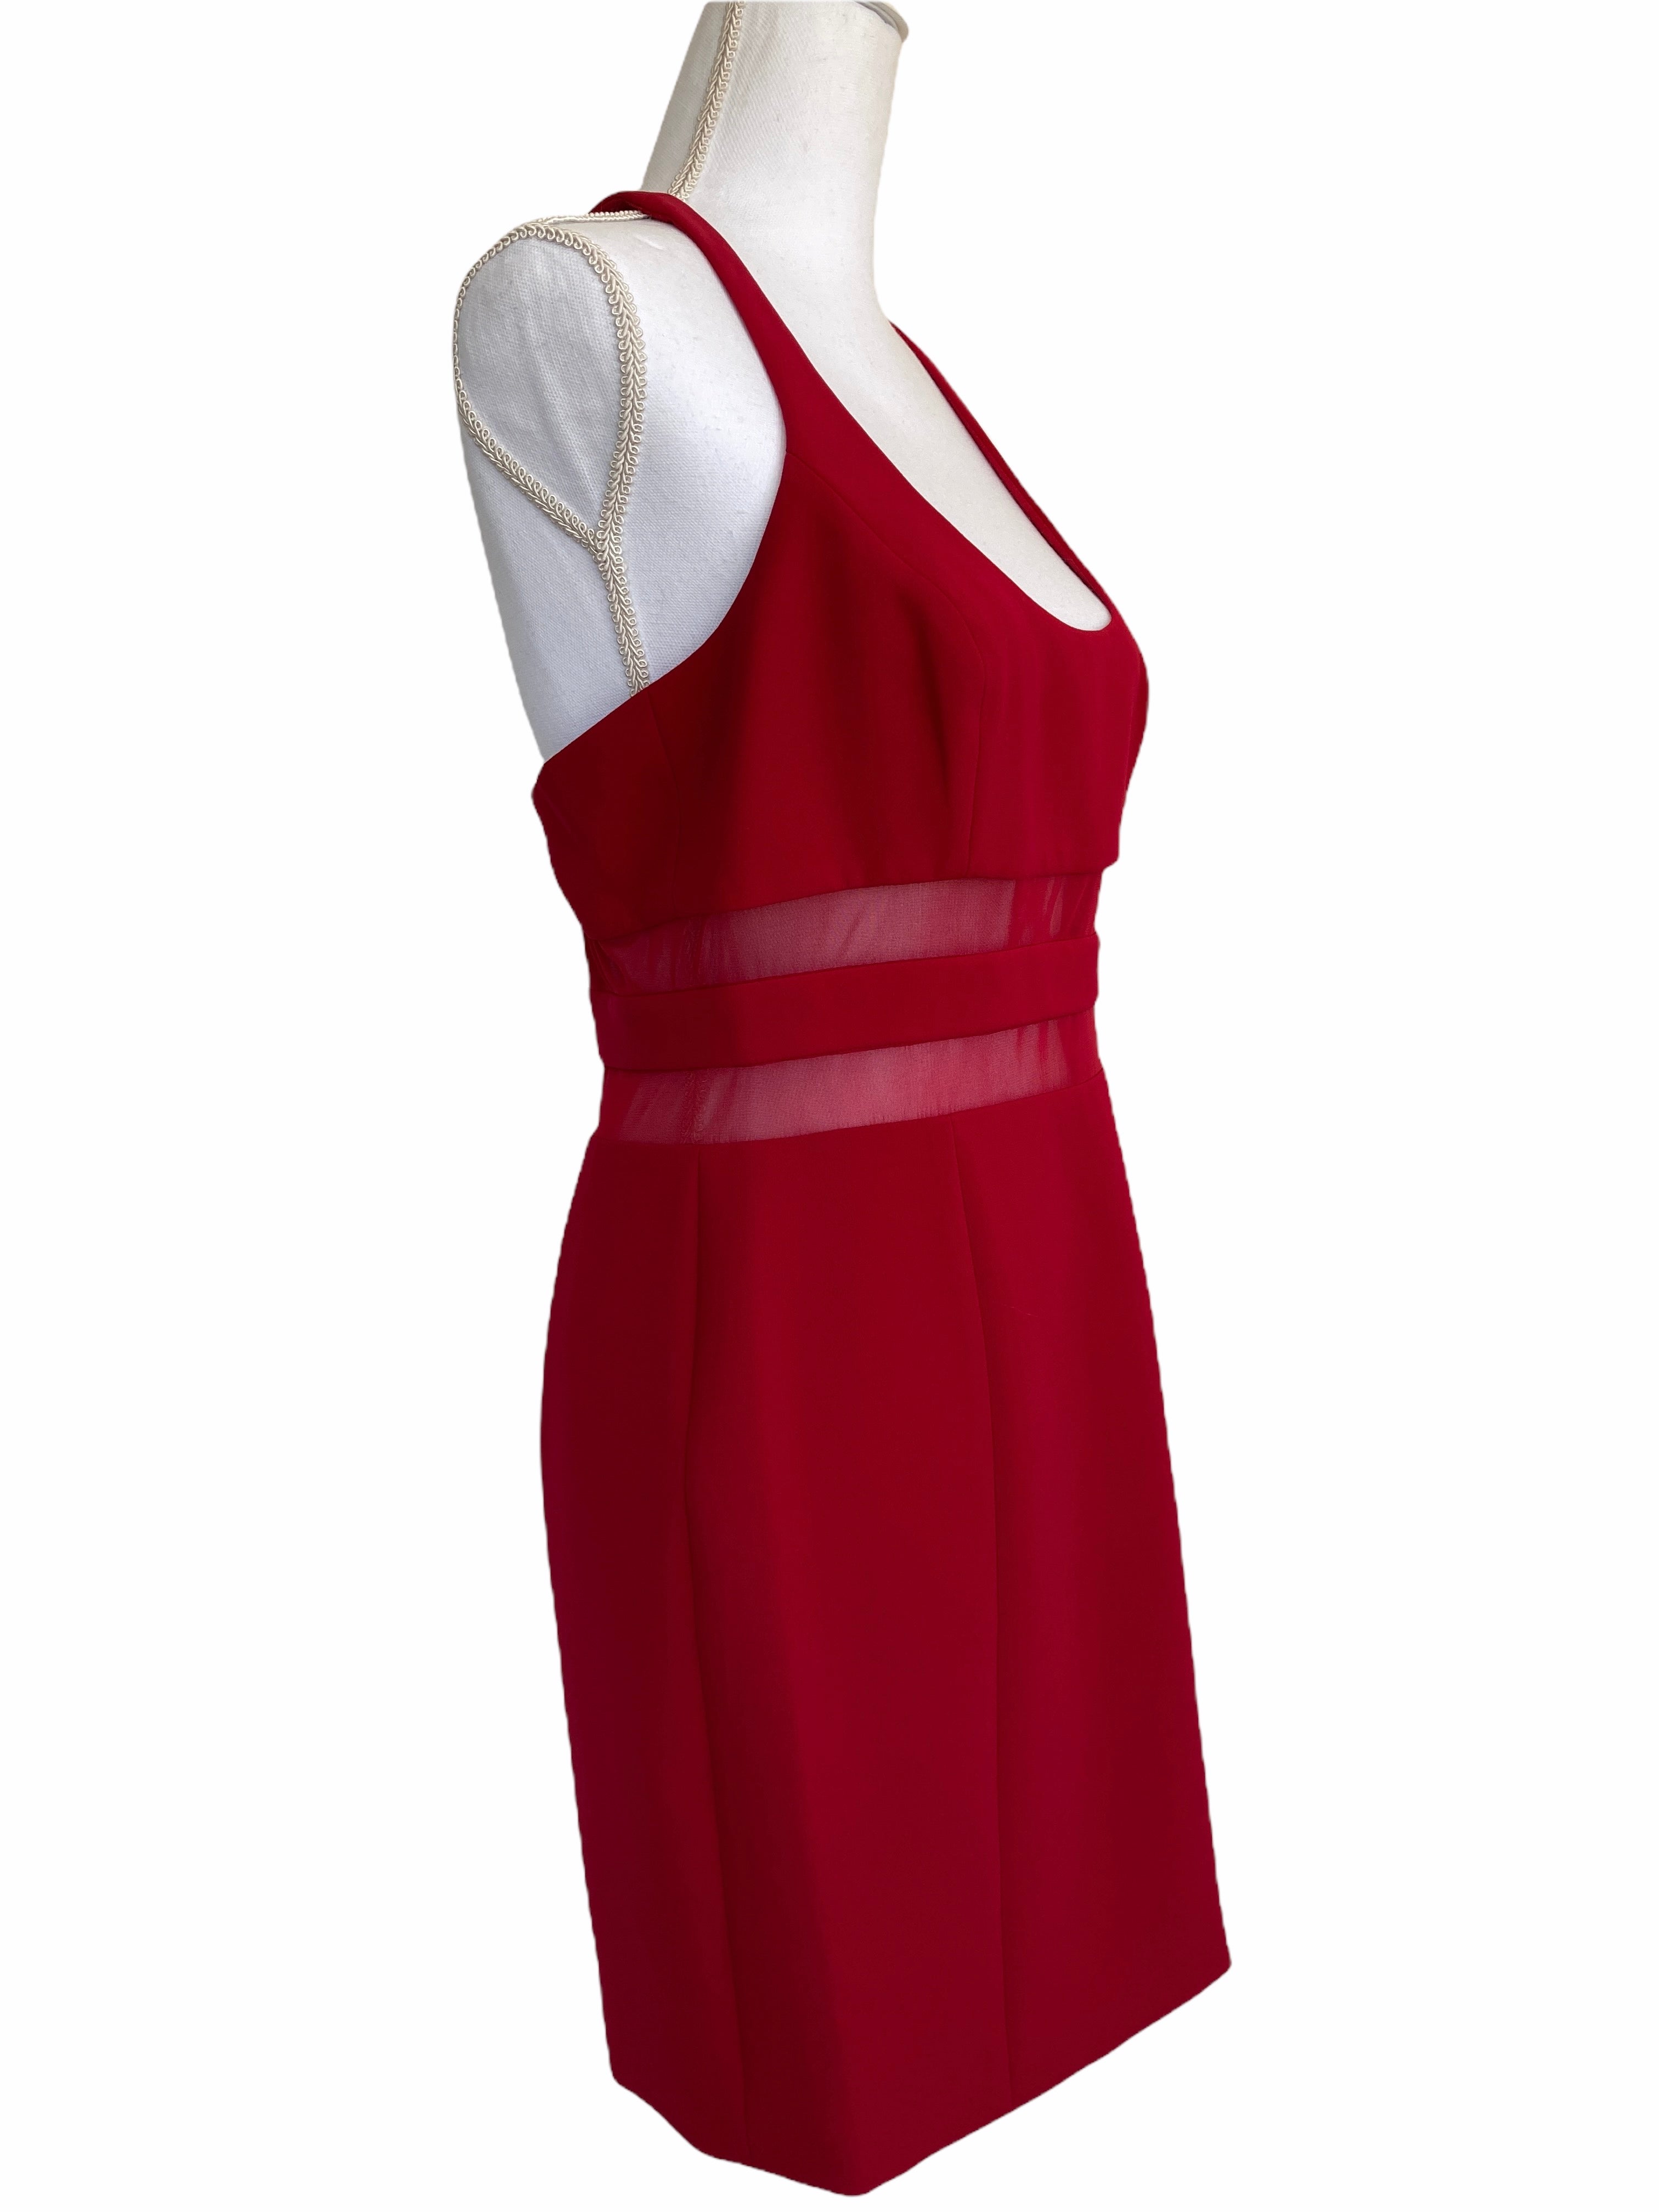 Jay Godfrey Red Cocktail Dress, 8